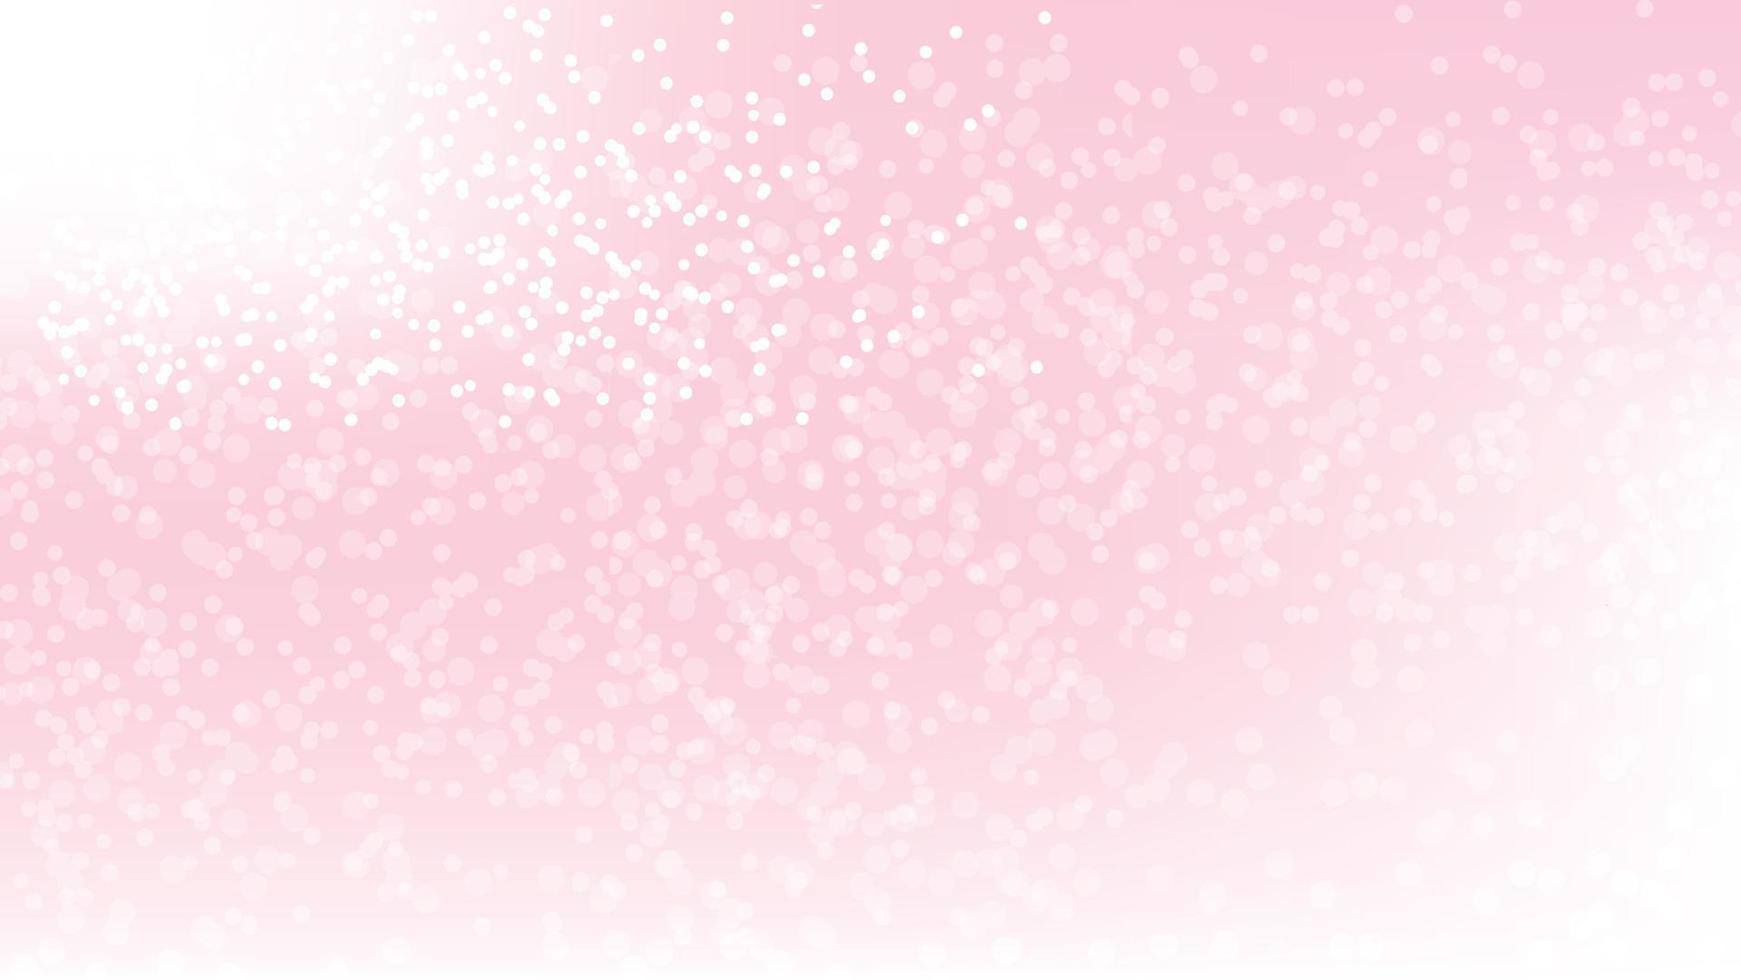 abstract bokeh lichten met zacht licht roze achtergrond illustratie vector